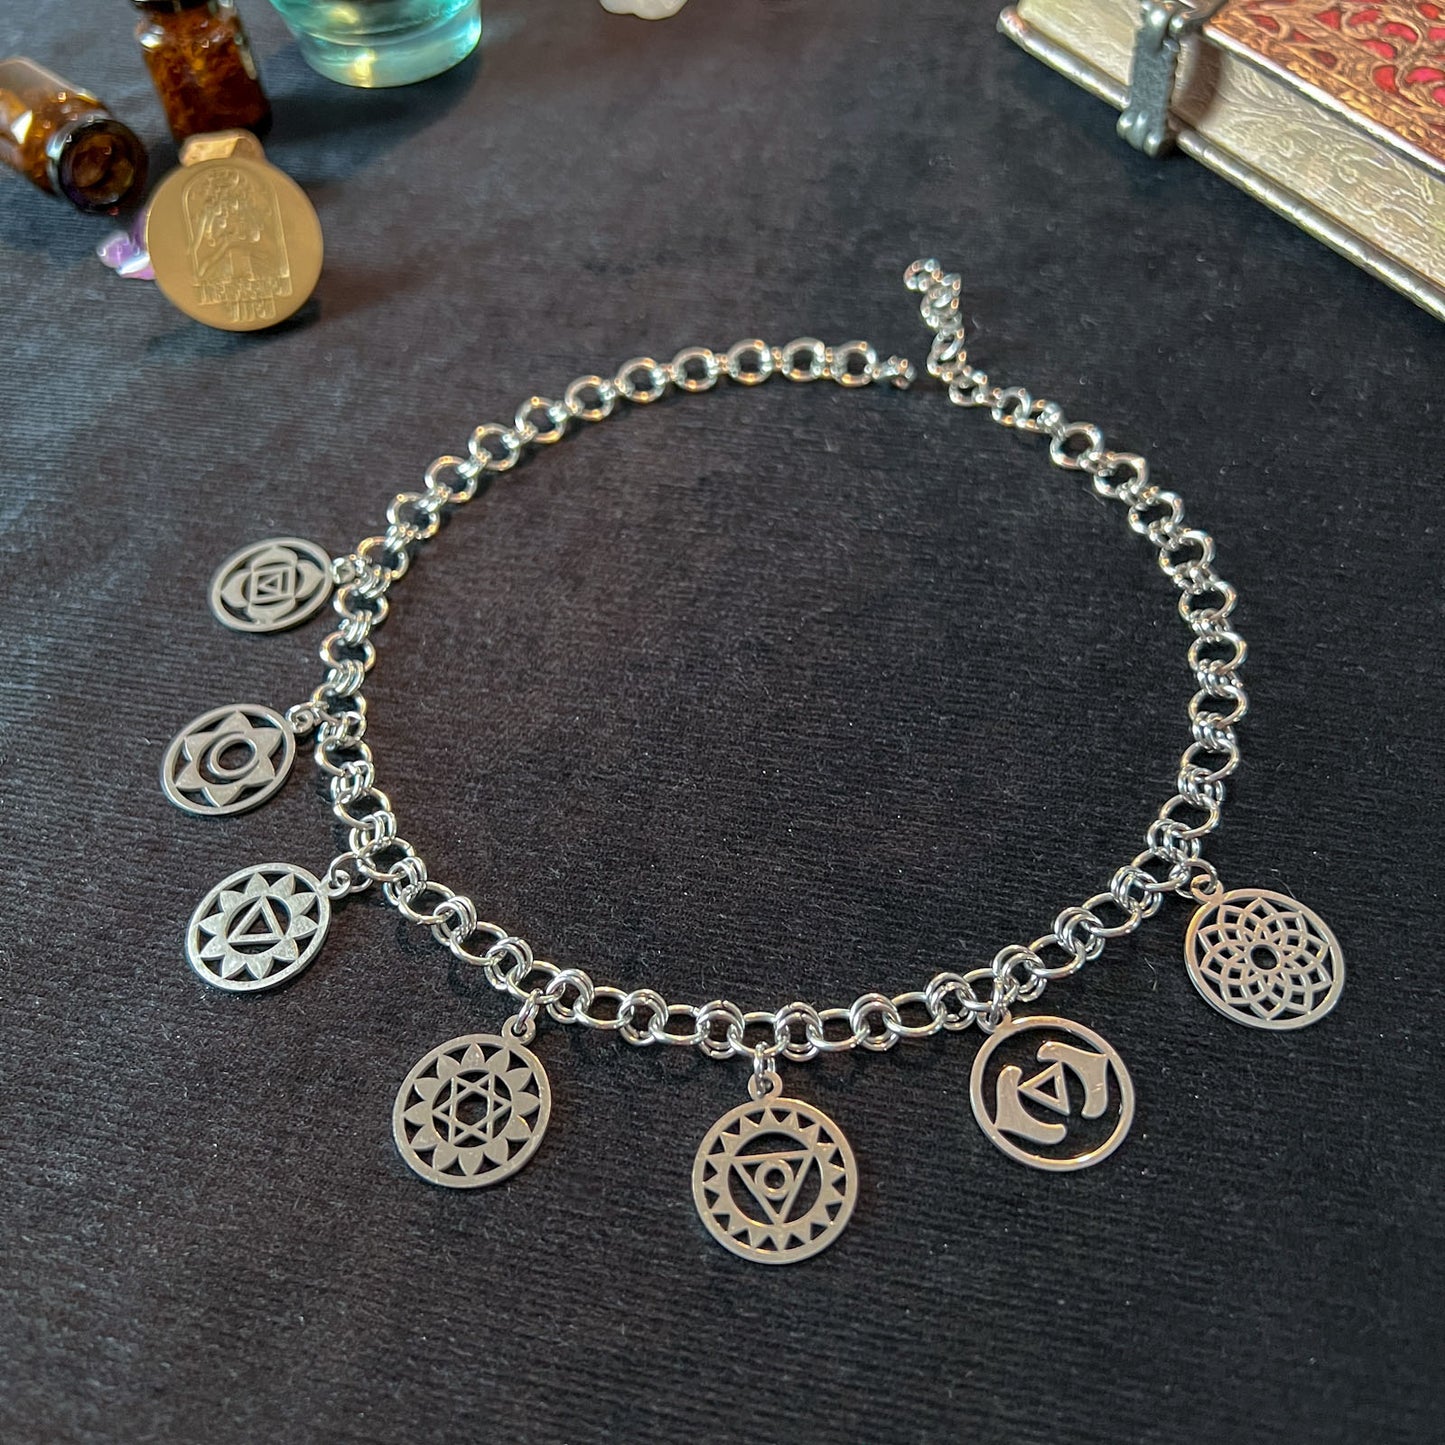 7 chakra necklace chainmail yoga reiki spiritual jewelry choker